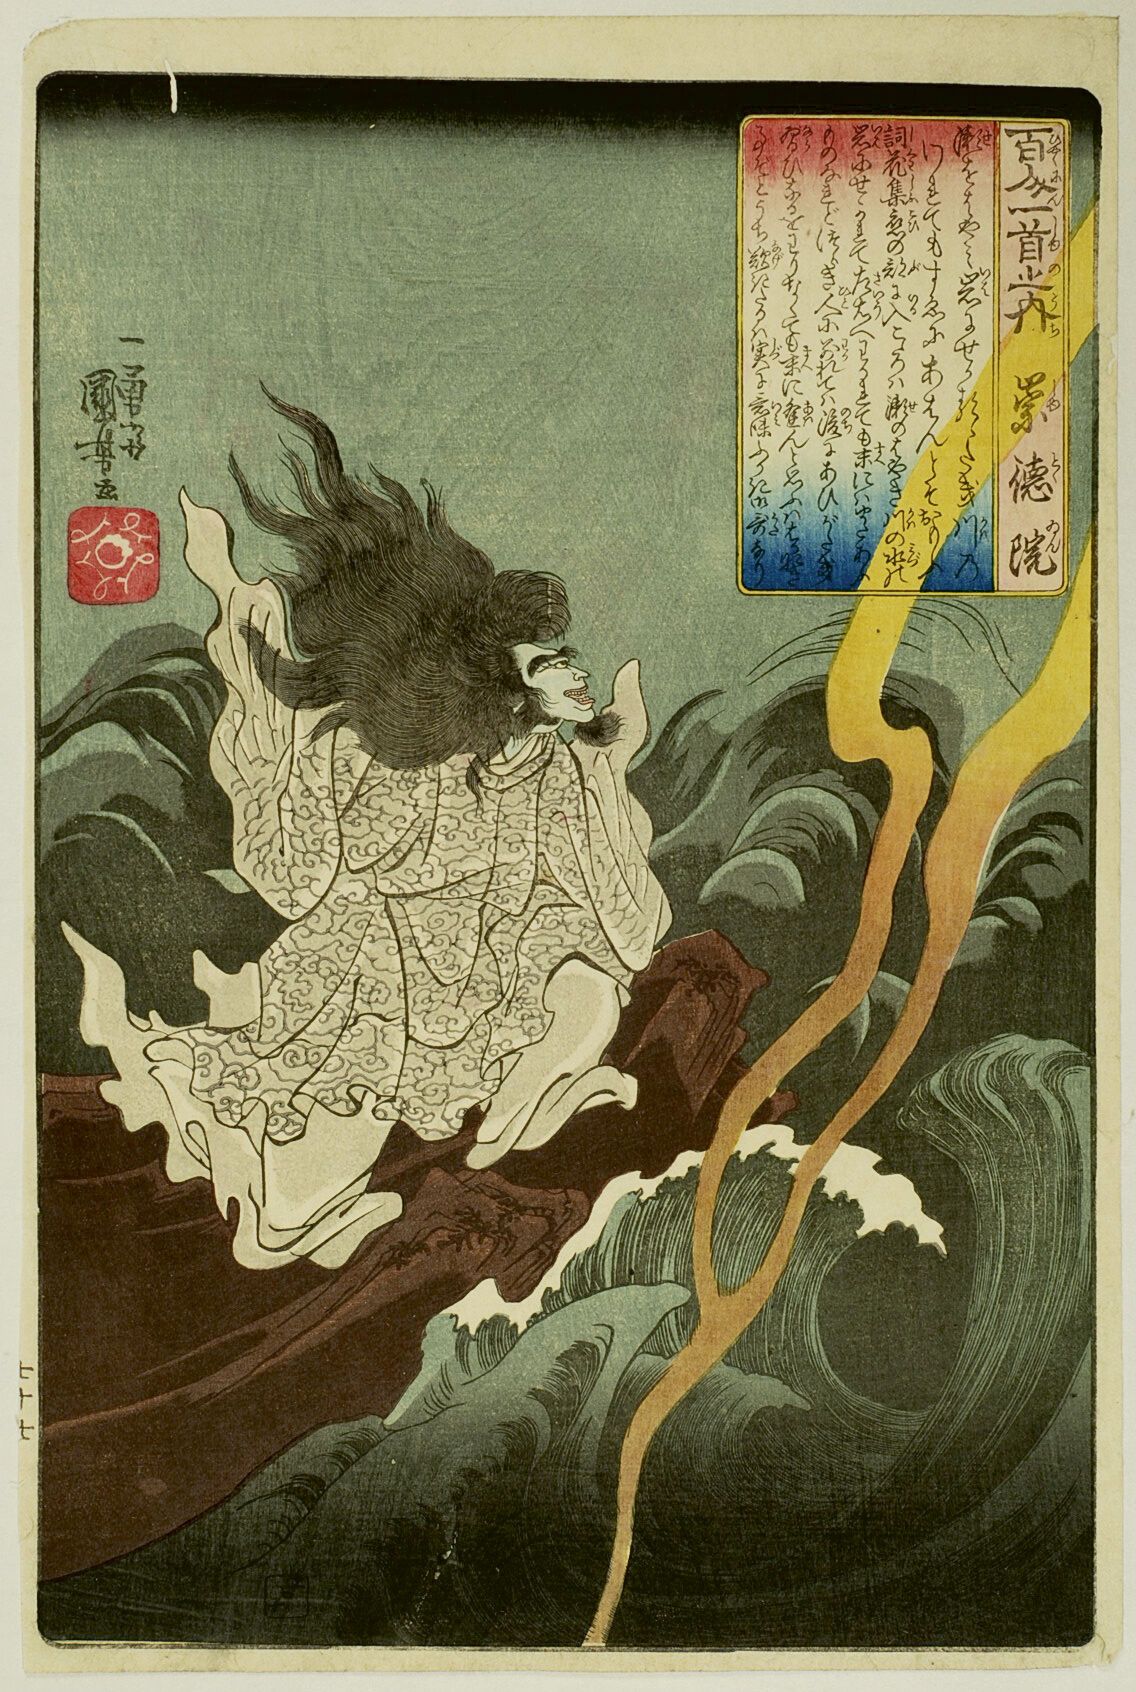 Null 宇都宫邦彦 (1797-1861)
百人一首》系列中的 "大板"（Oban tate-e），板块为 "Sutoku-in"（天皇的幽灵在召唤风暴）。 &hellip;